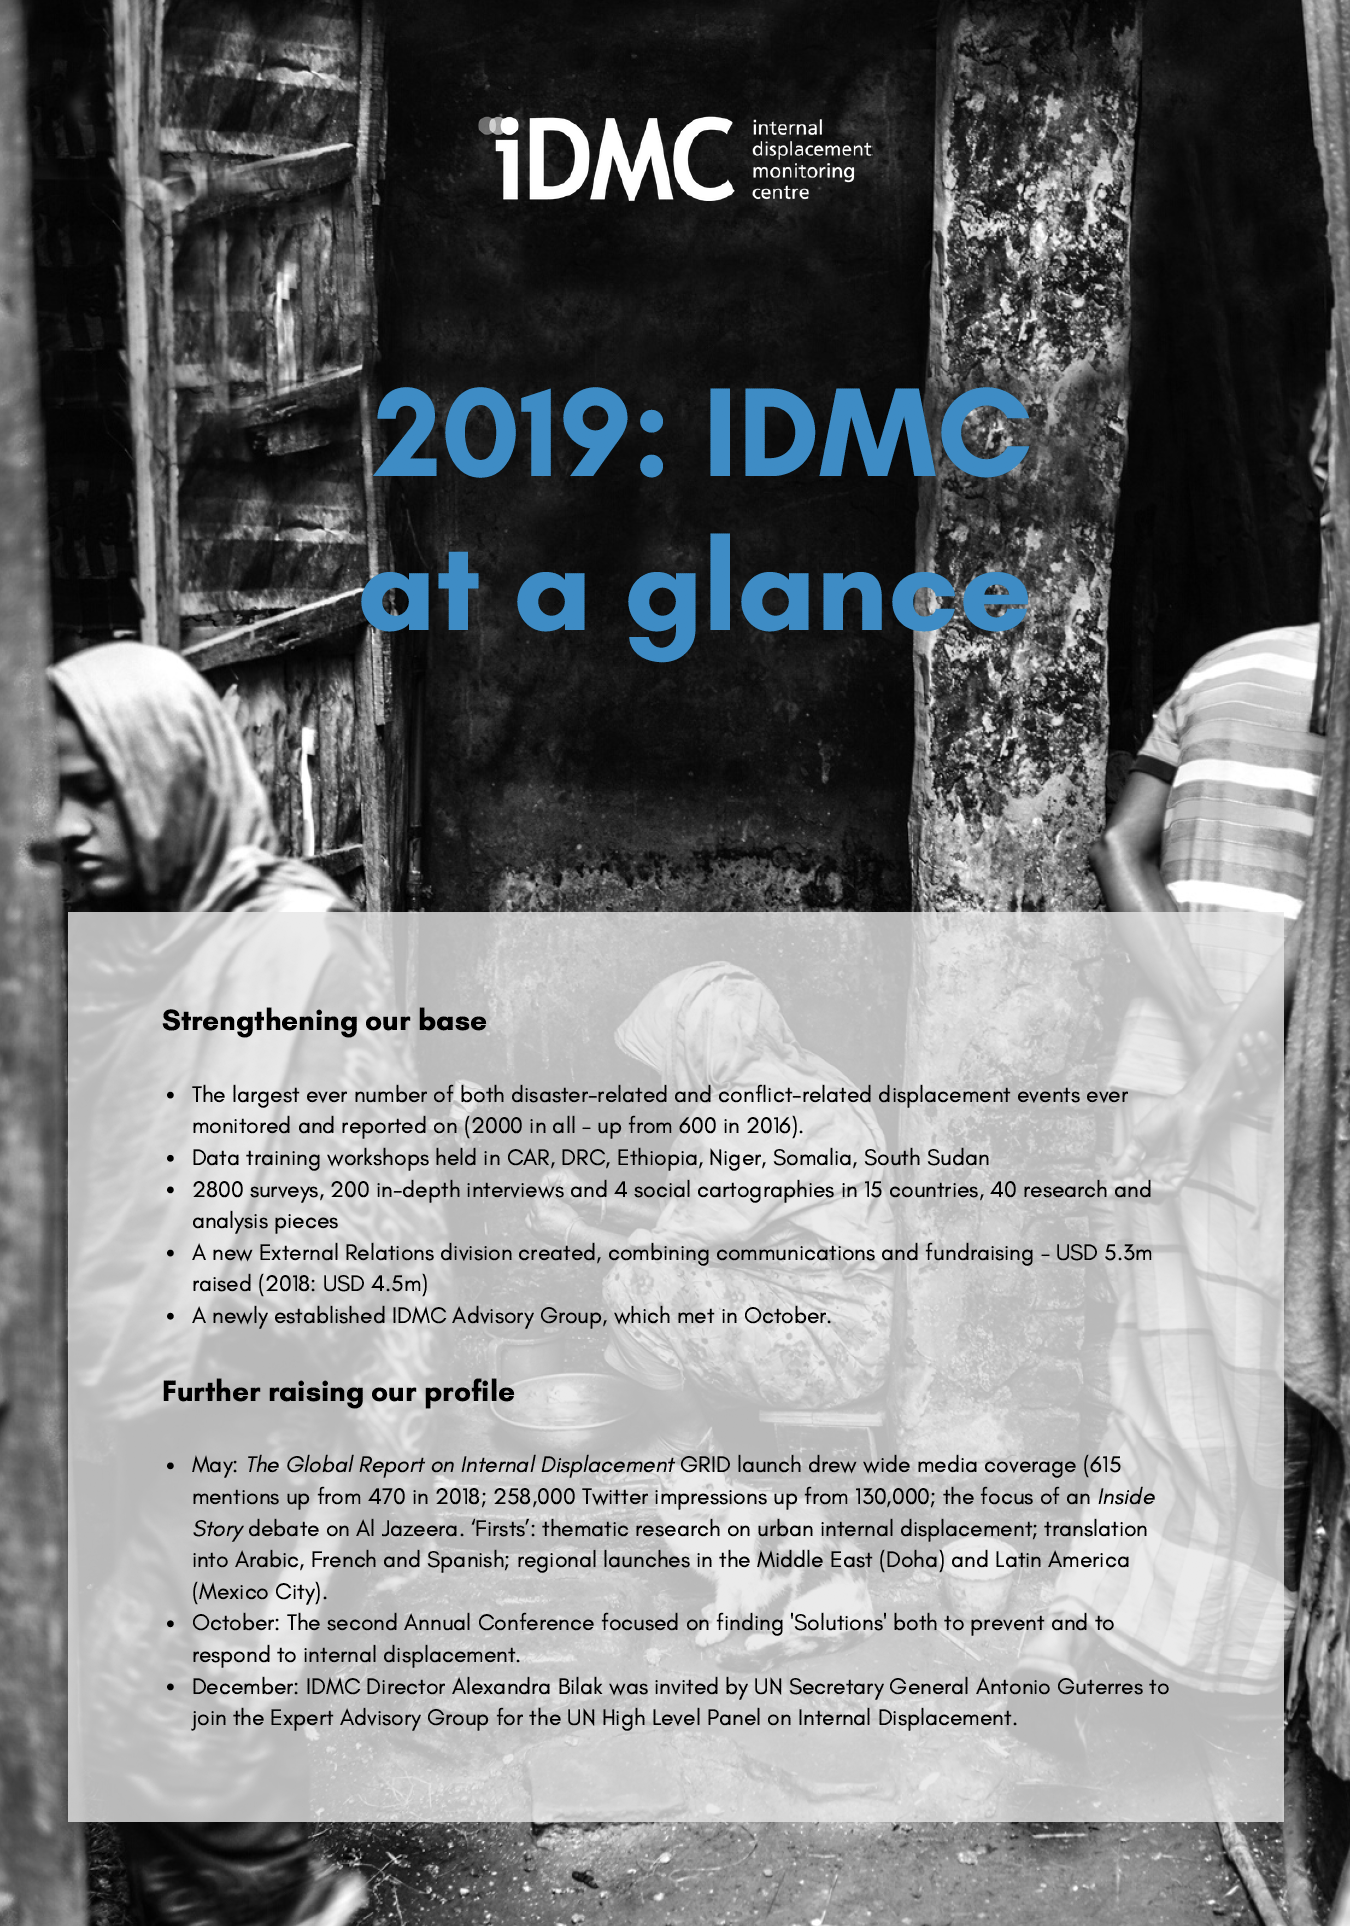 IDMC's 2019 at a glance